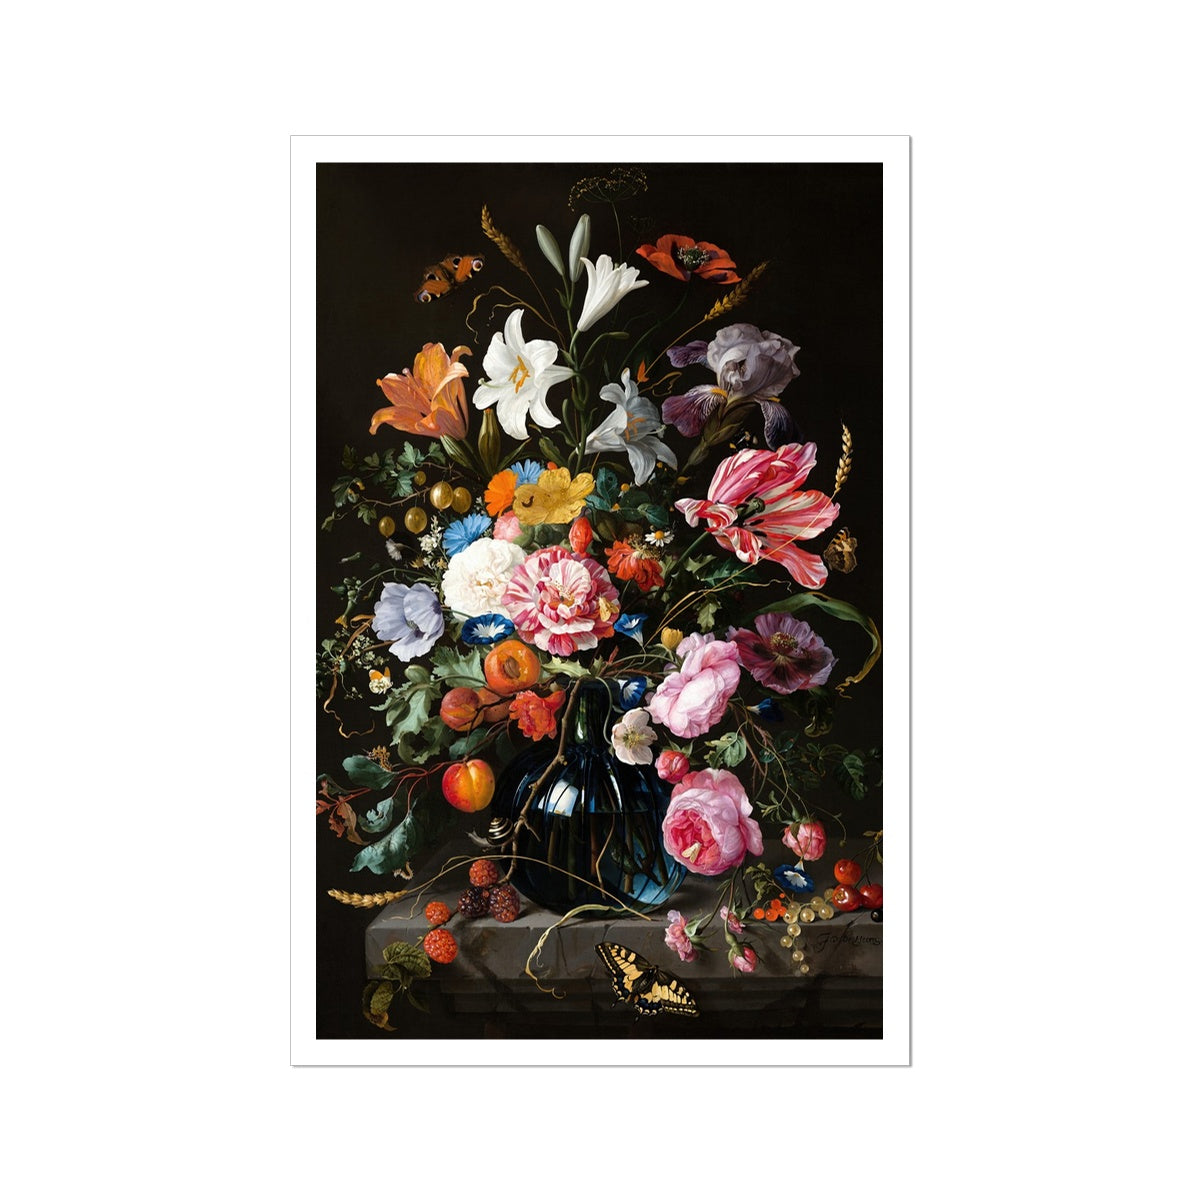 &#39;Vase of Flowers&#39; Still Life by Jan Davidsz de Heem. Open Edition Fine Art Print. Historic Art